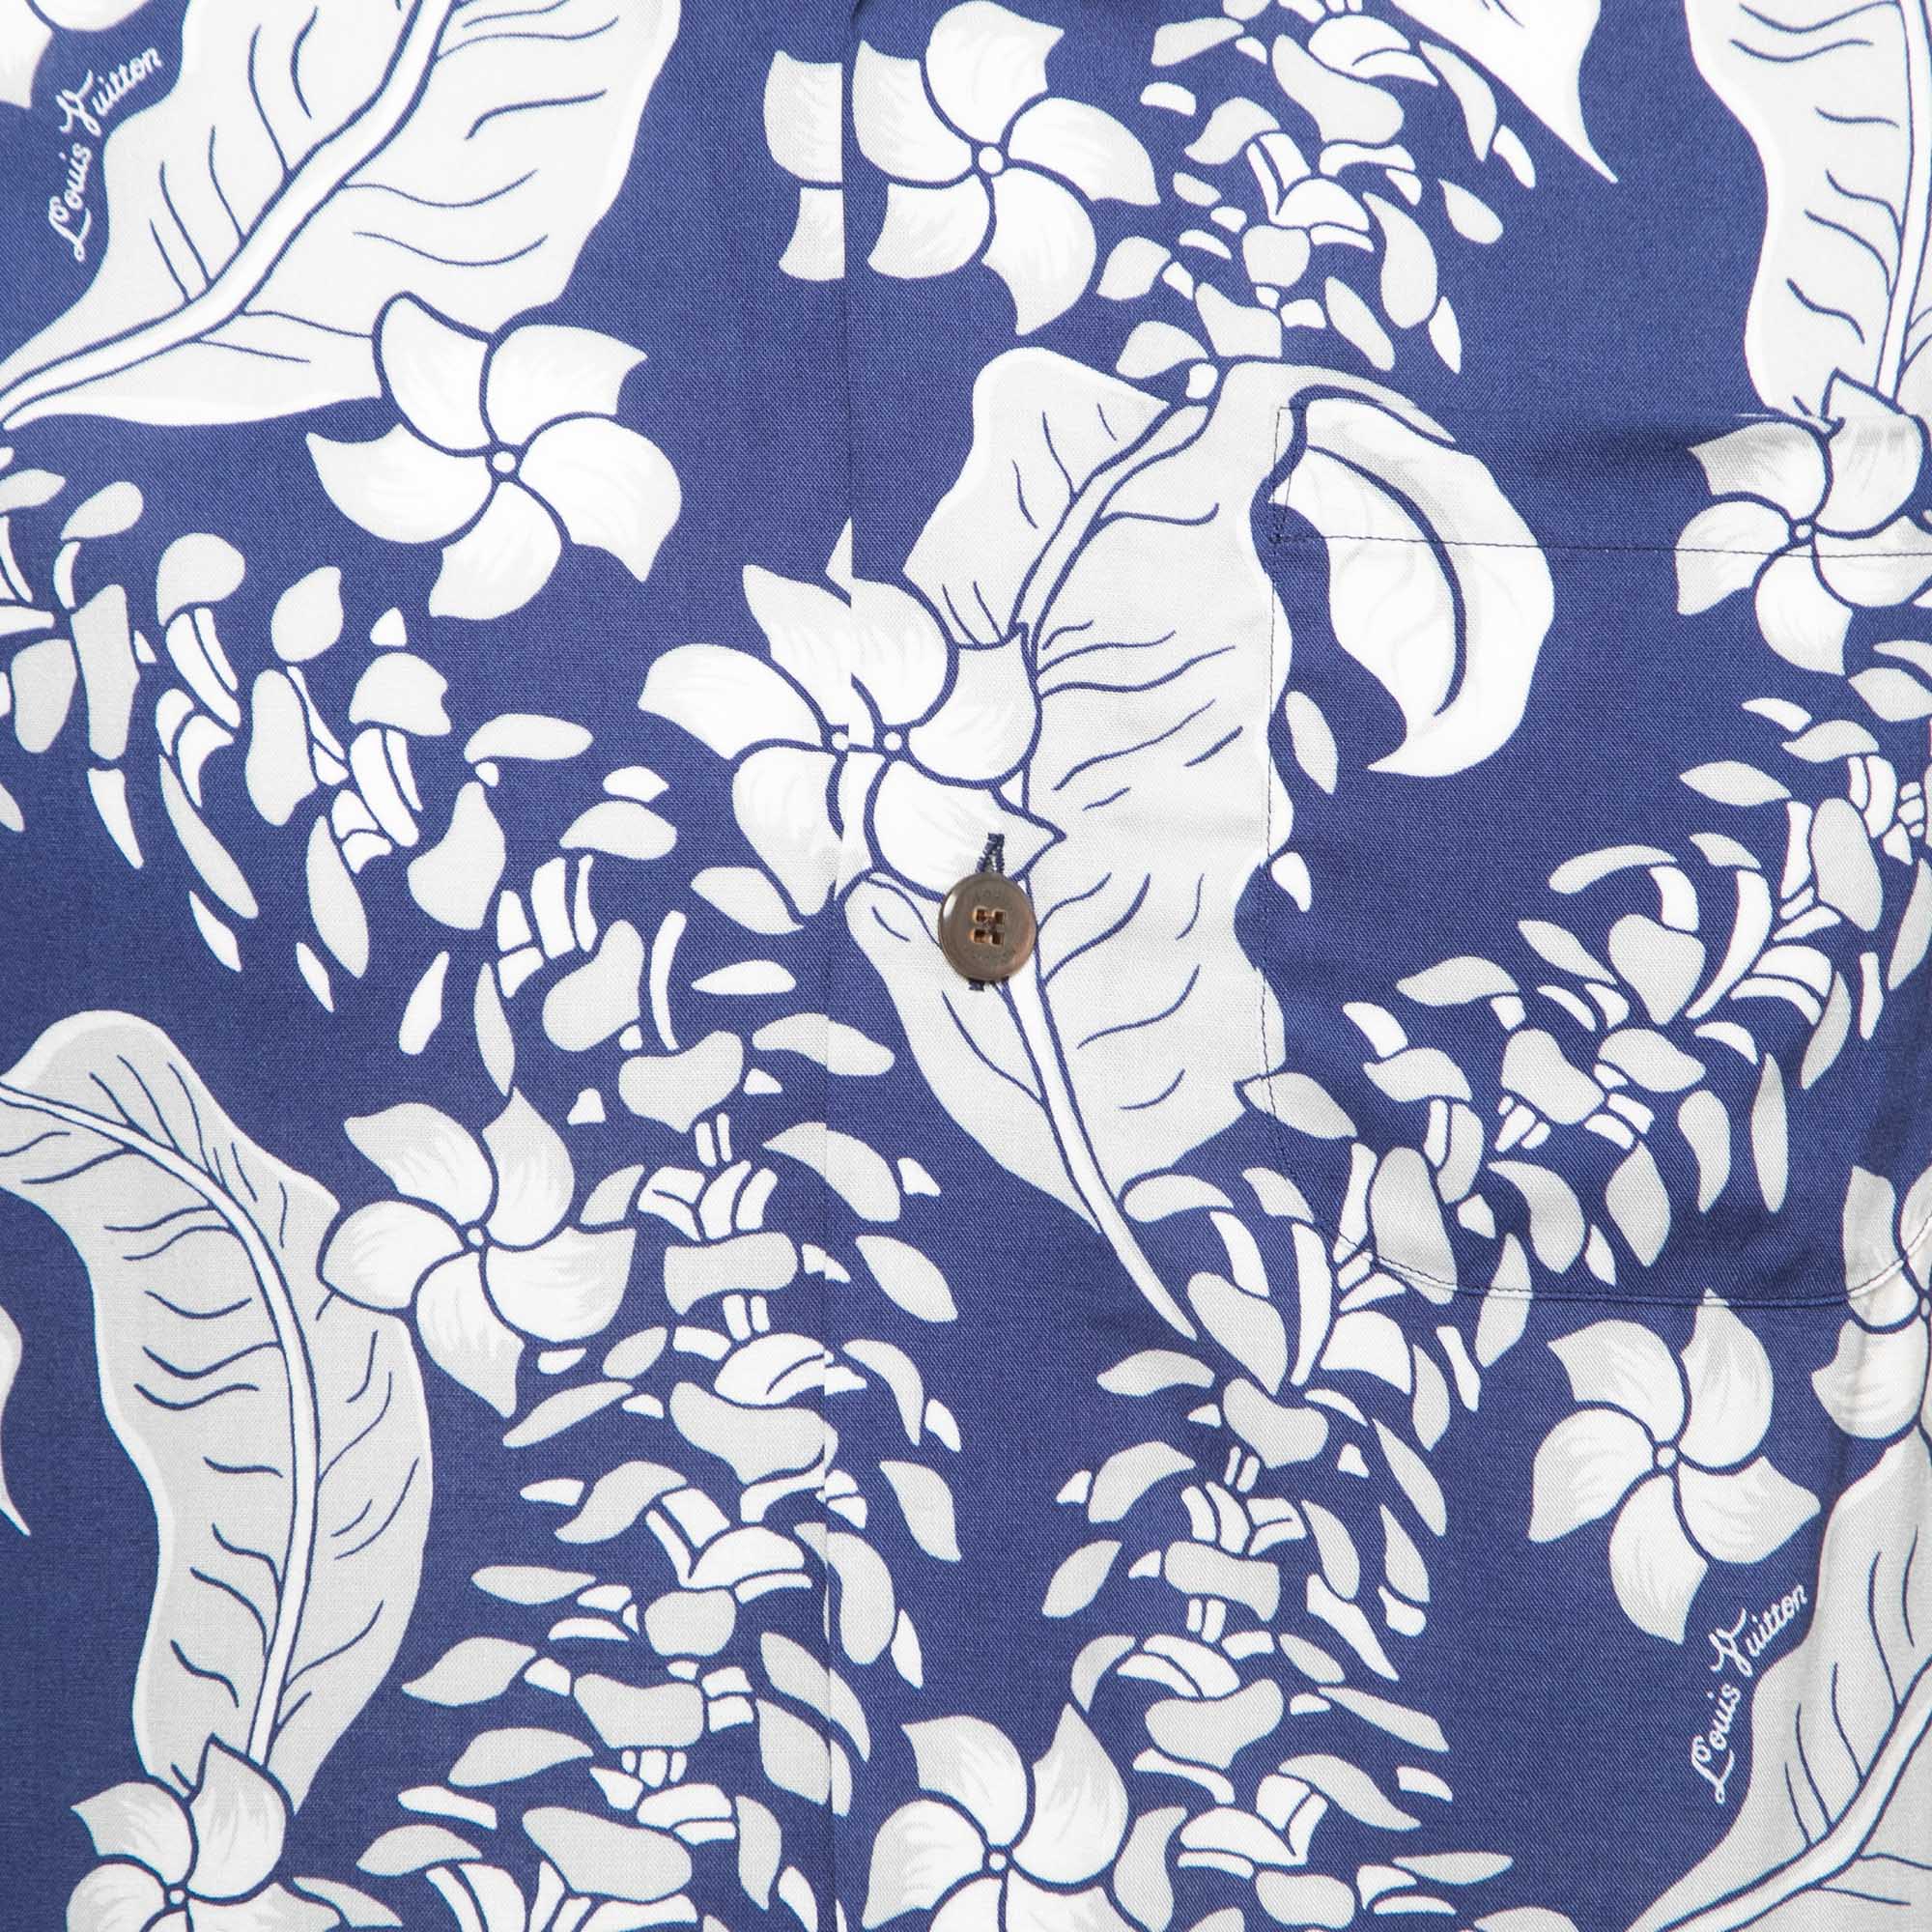 Louis Vuitton Blue Floral Printed Viscose Short Sleeve Shirt XS